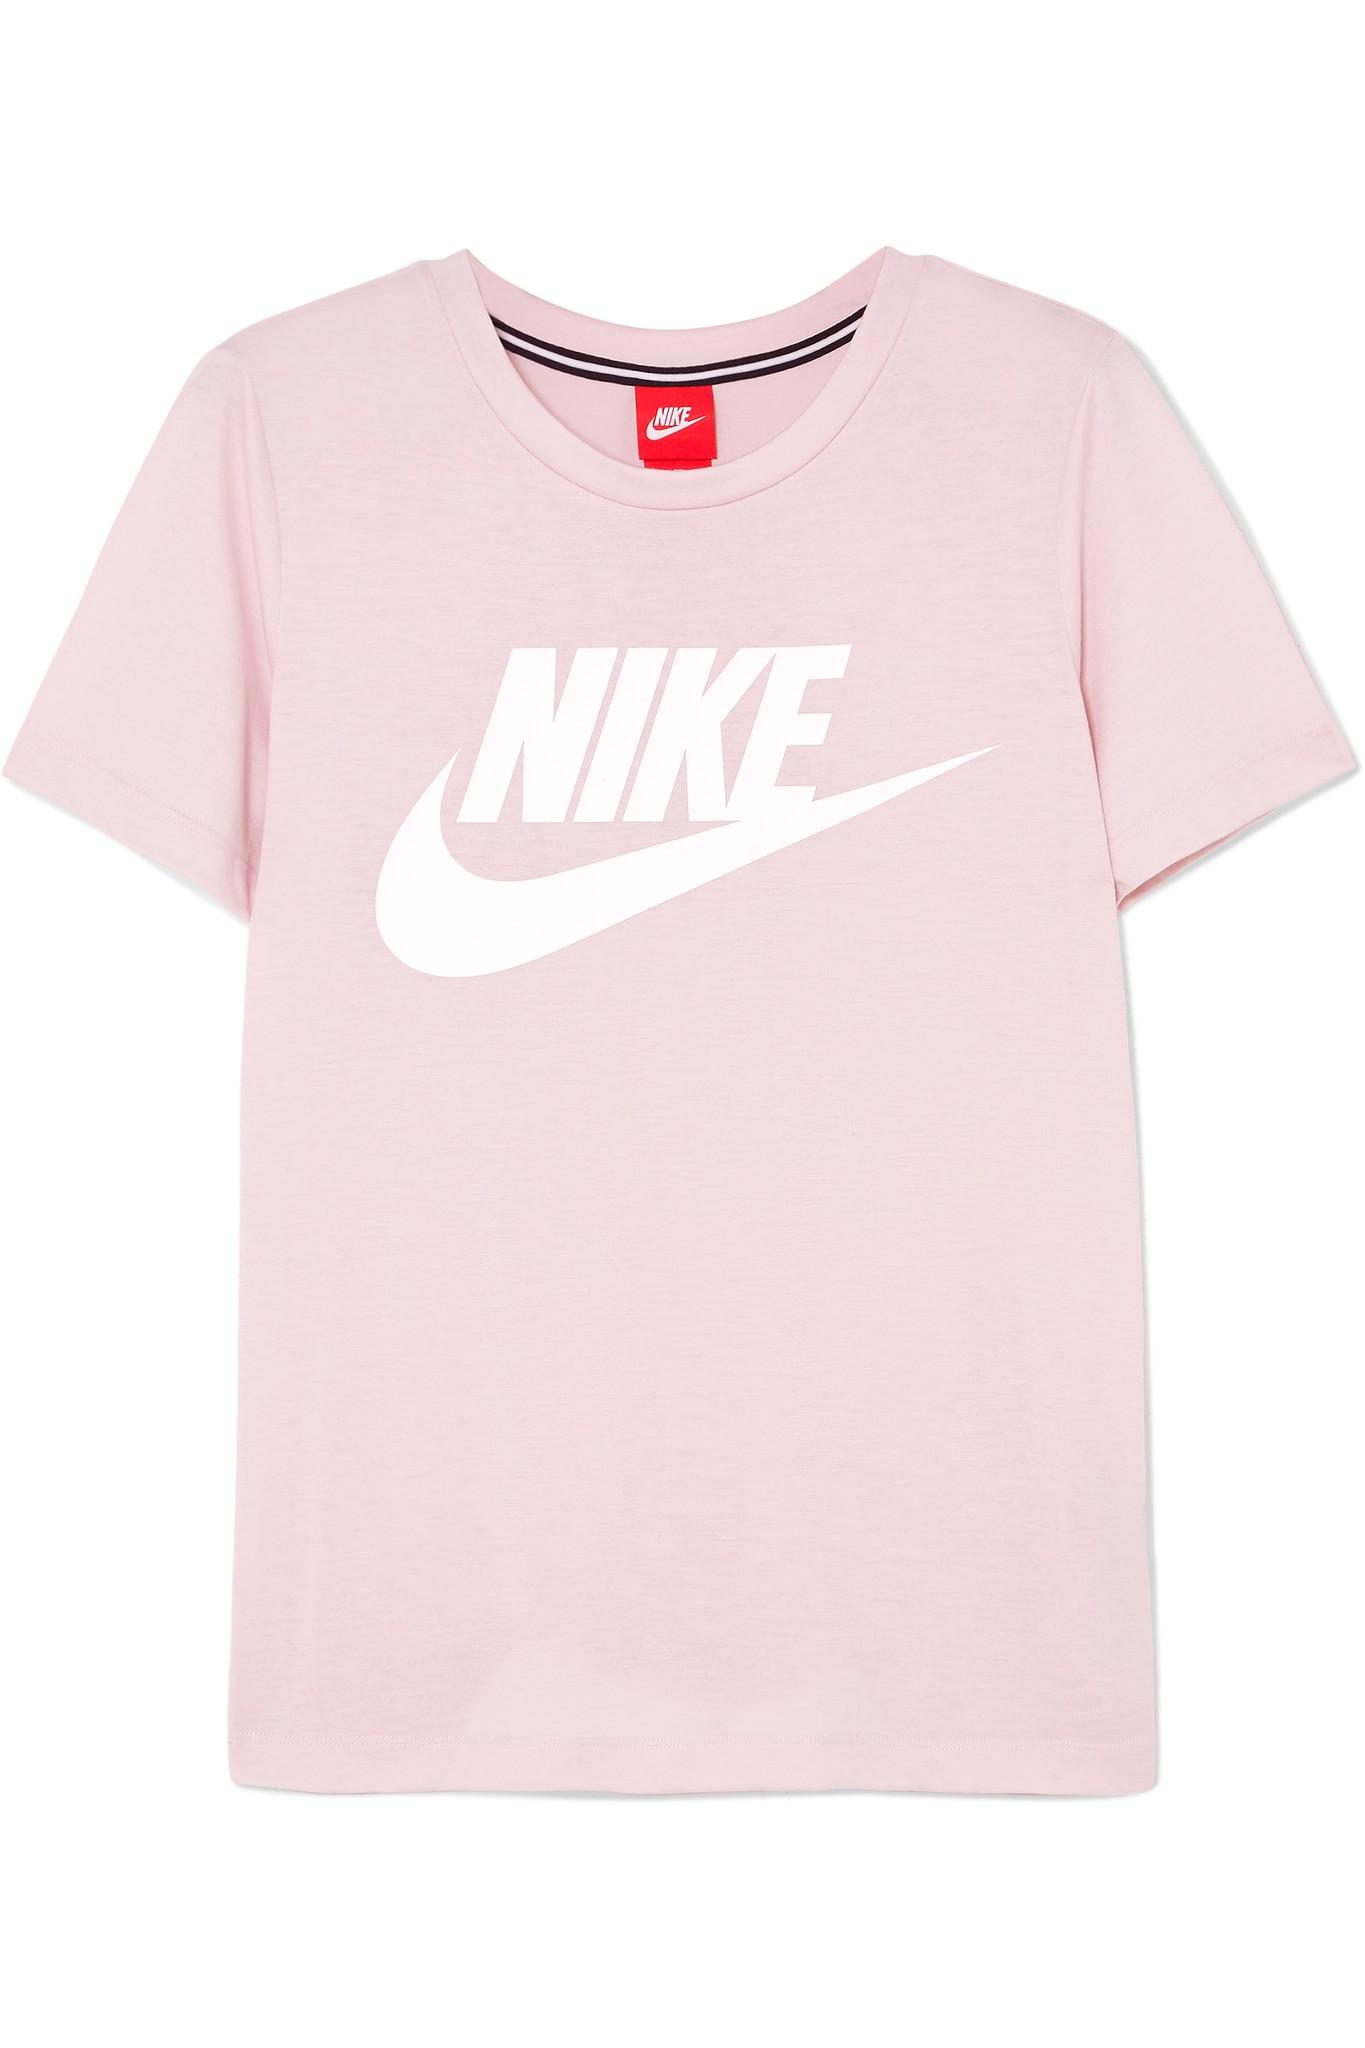 white and pink nike shirt